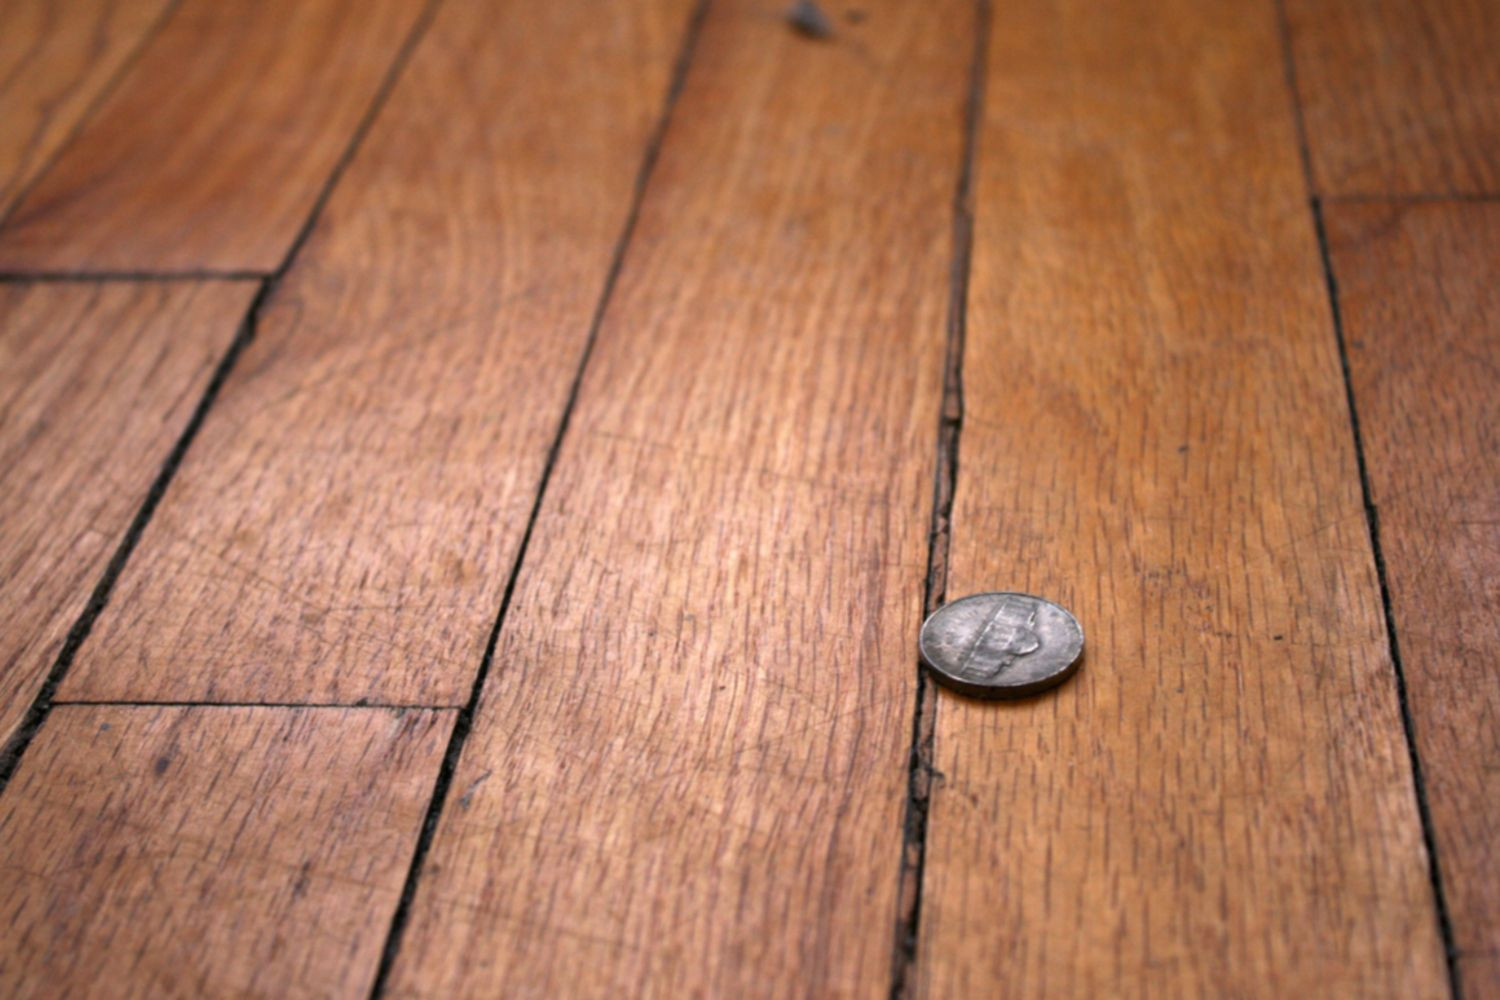 16 Best How to Refinish Hardwood Floors with Gaps 2024 free download how to refinish hardwood floors with gaps of how to repair gaps between floorboards inside wood floor with gaps between boards 1500 x 1000 56a49eb25f9b58b7d0d7df8d